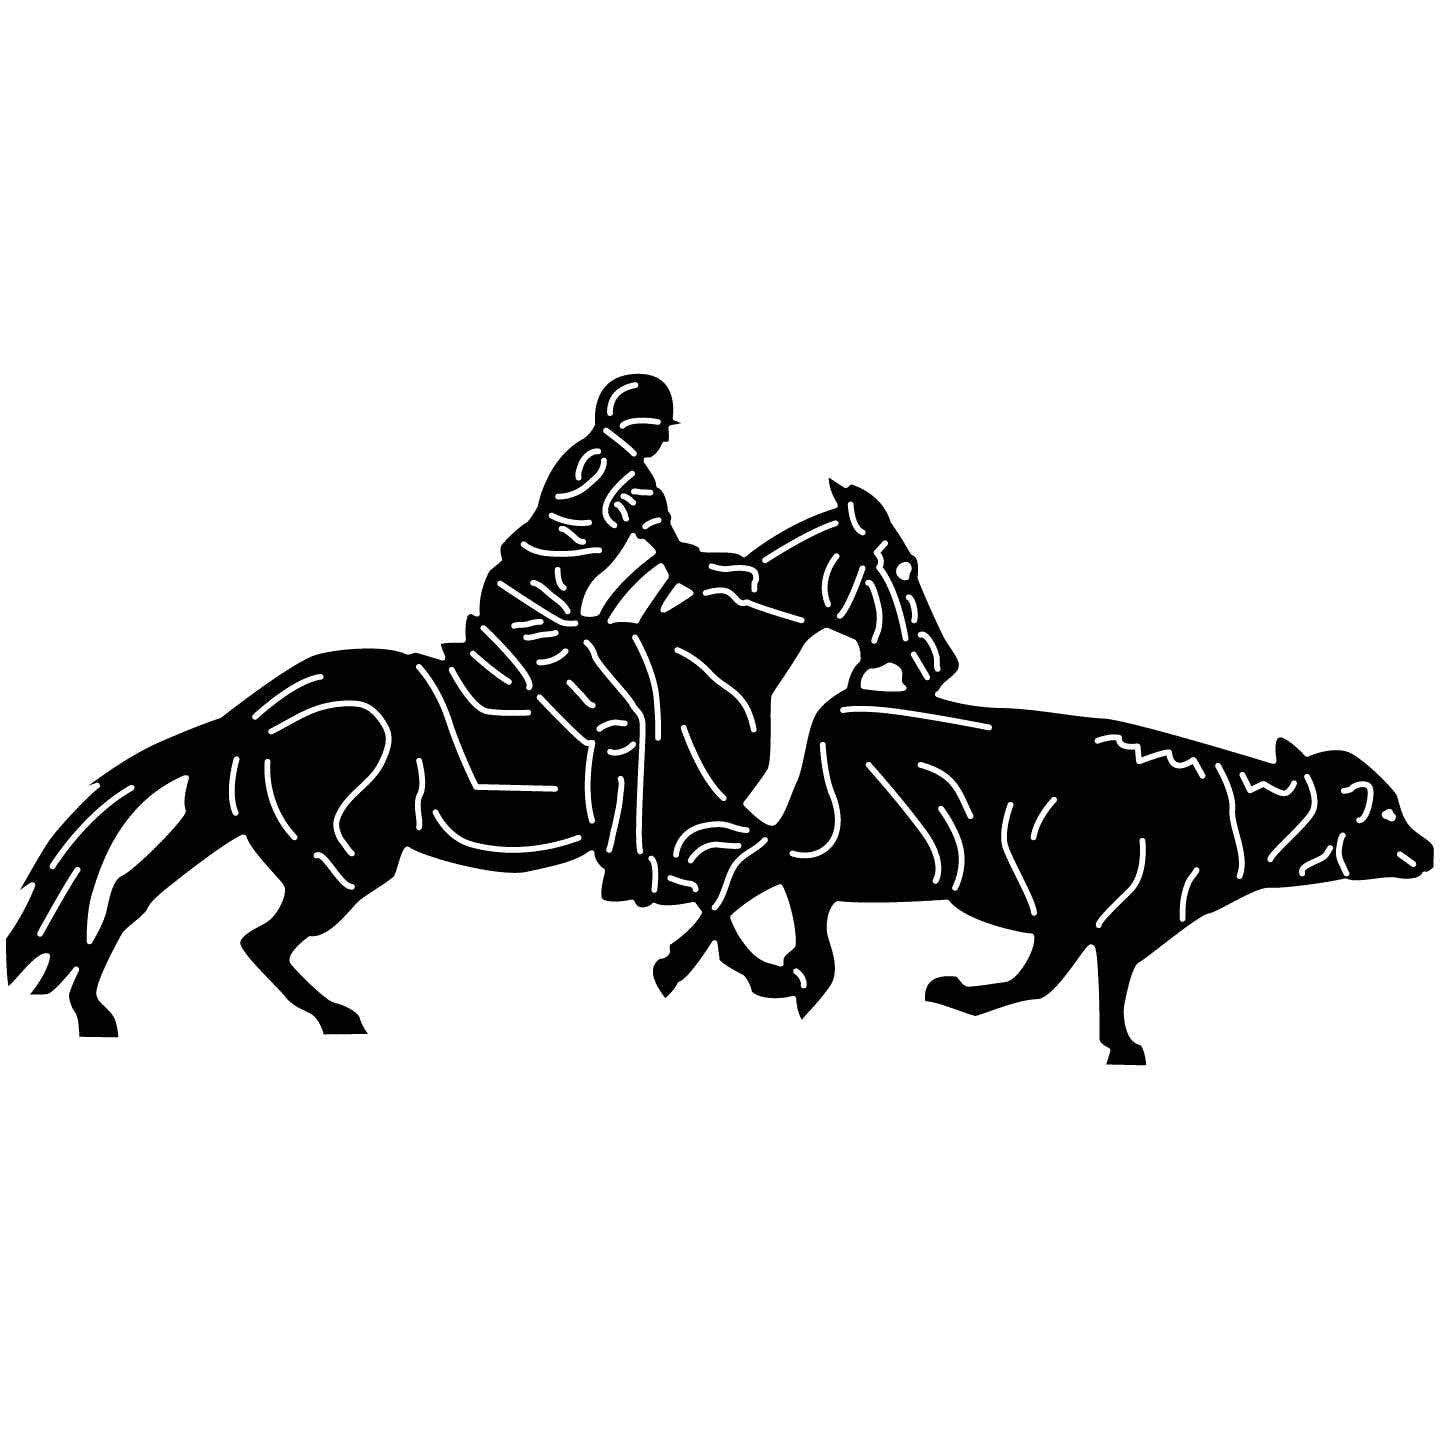 Horse Rider Hunting Cow-DXFforCNC.com-DXF Files cut ready cnc machines